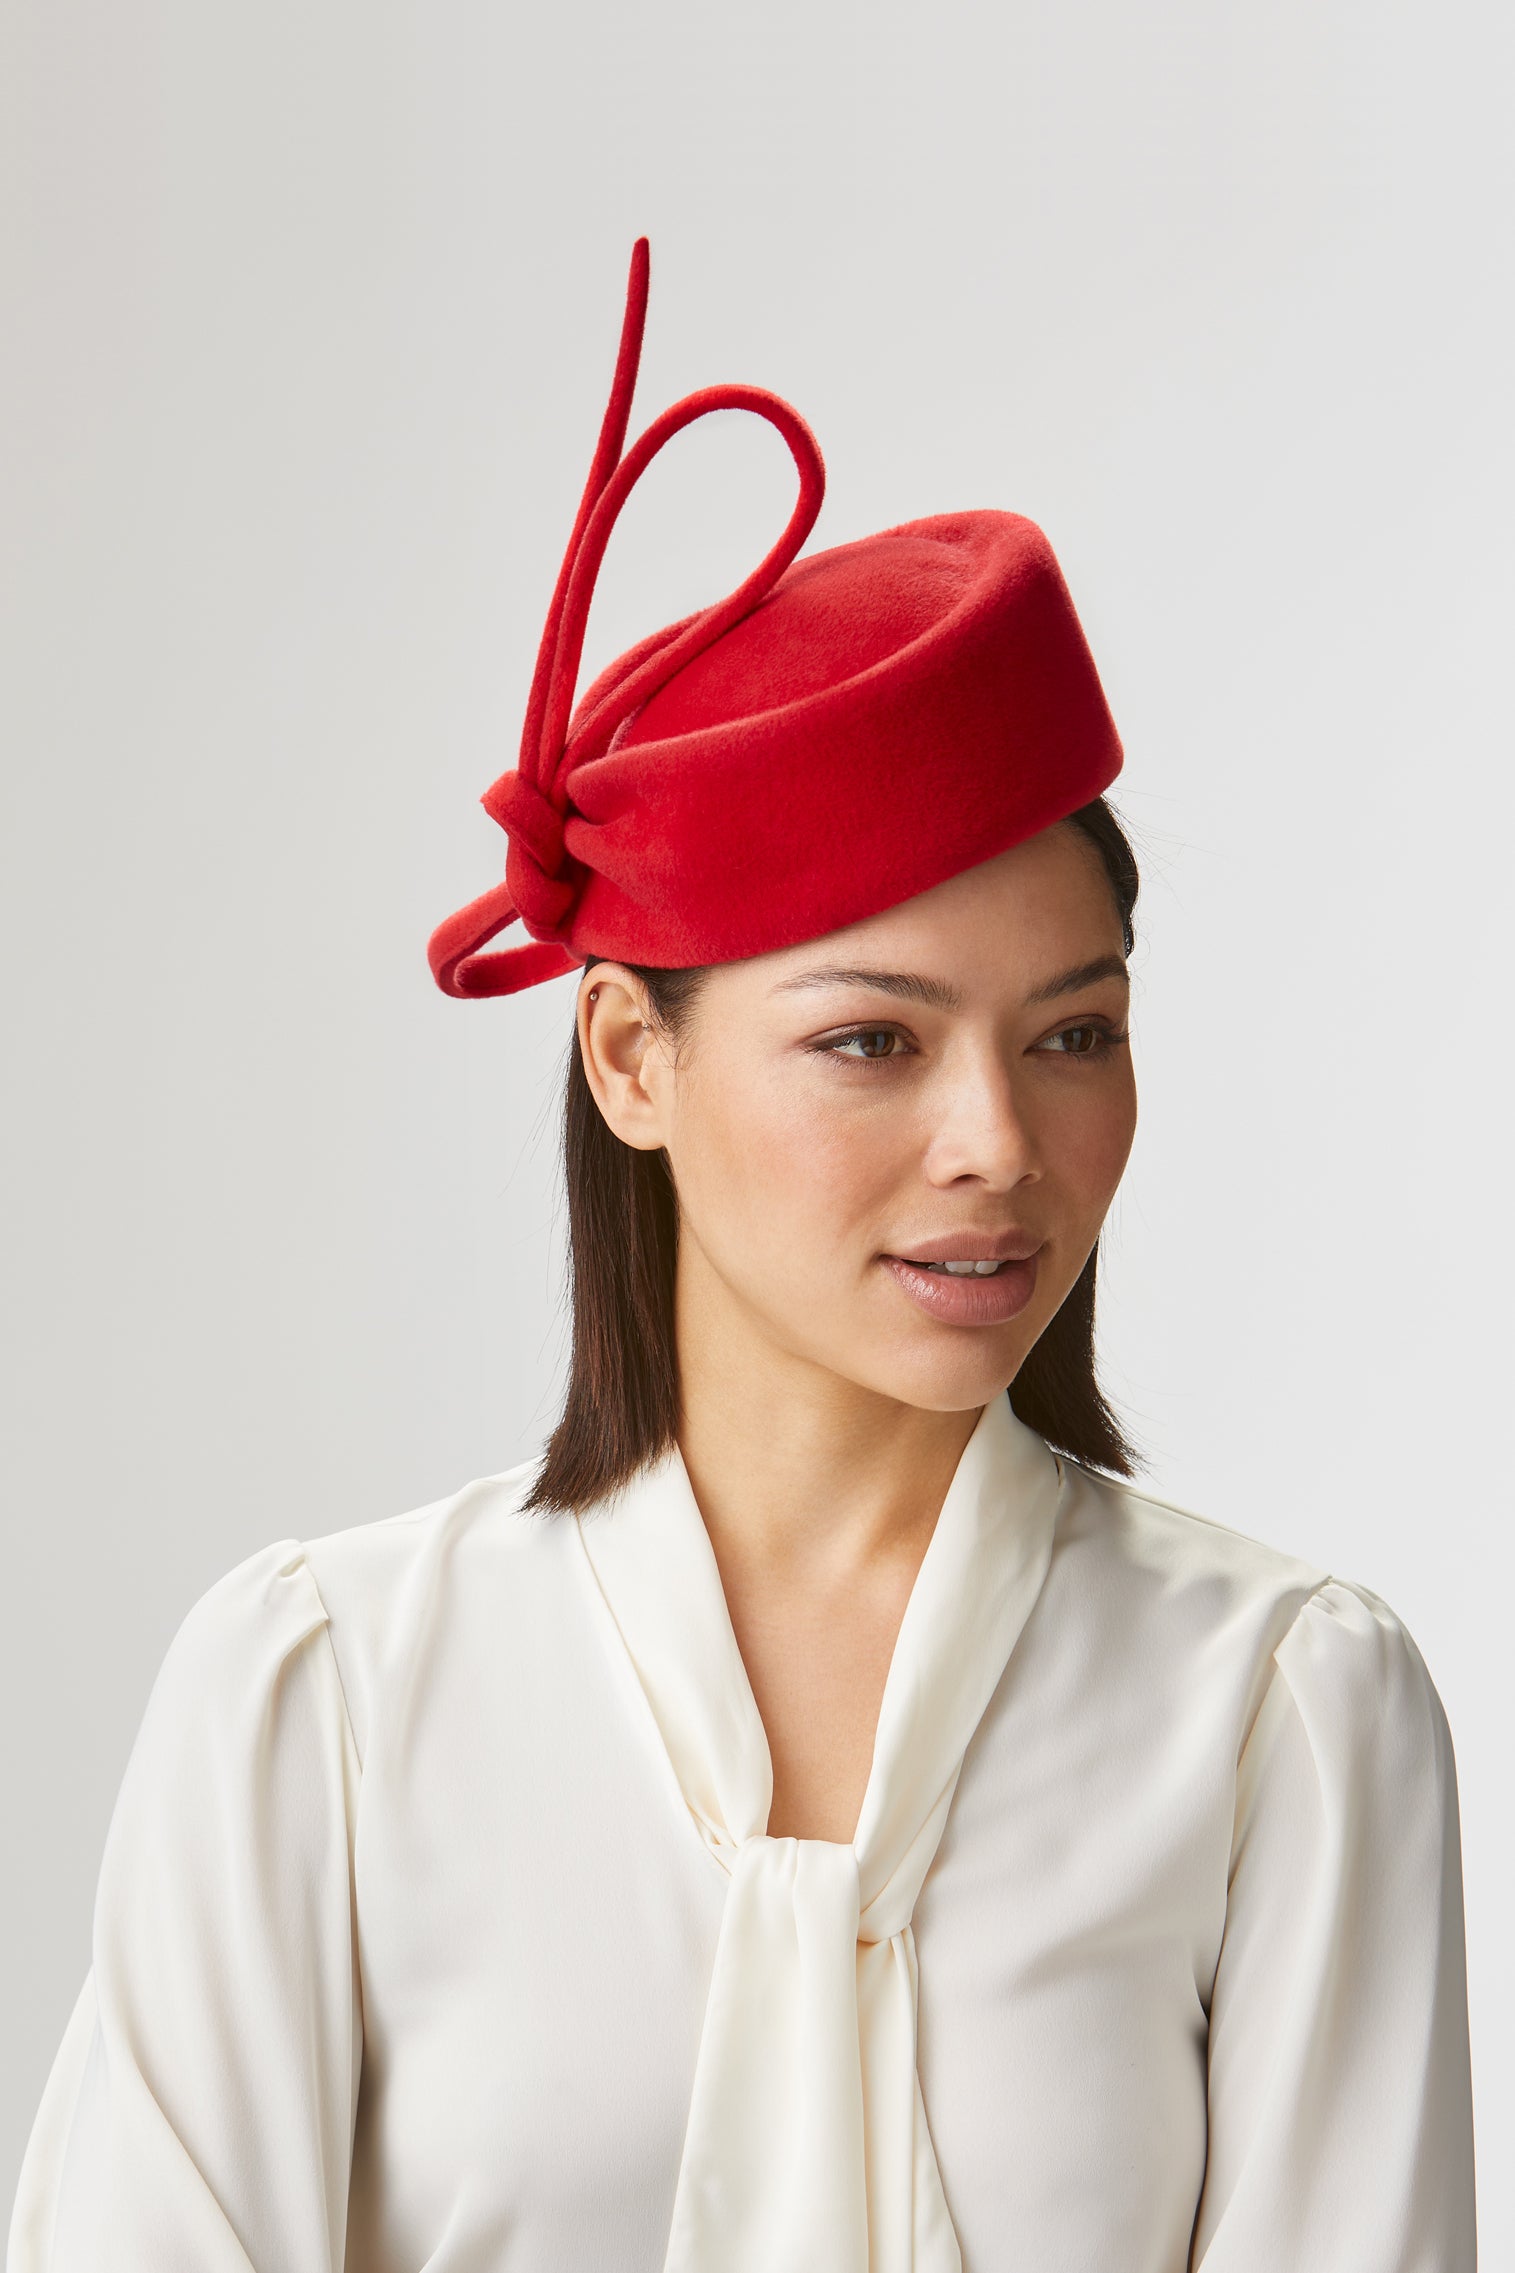 Mayfair Red Pillbox Hat - Hats for Cheltenham Races - Lock & Co. Hatters London UK